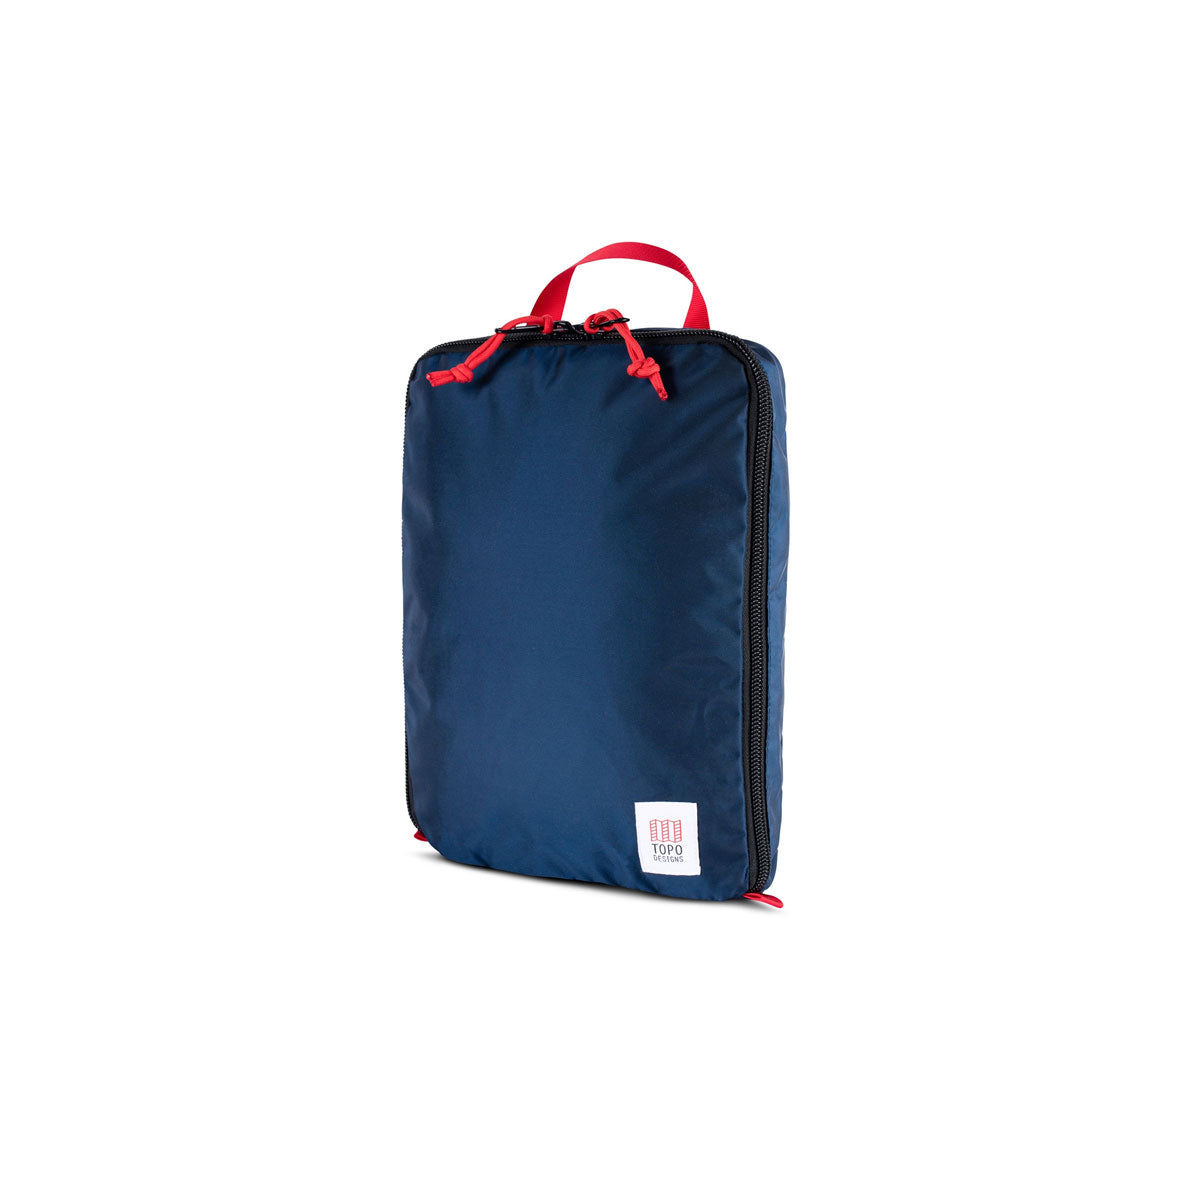 Topo Designs : Pack Bag 10L : Navy